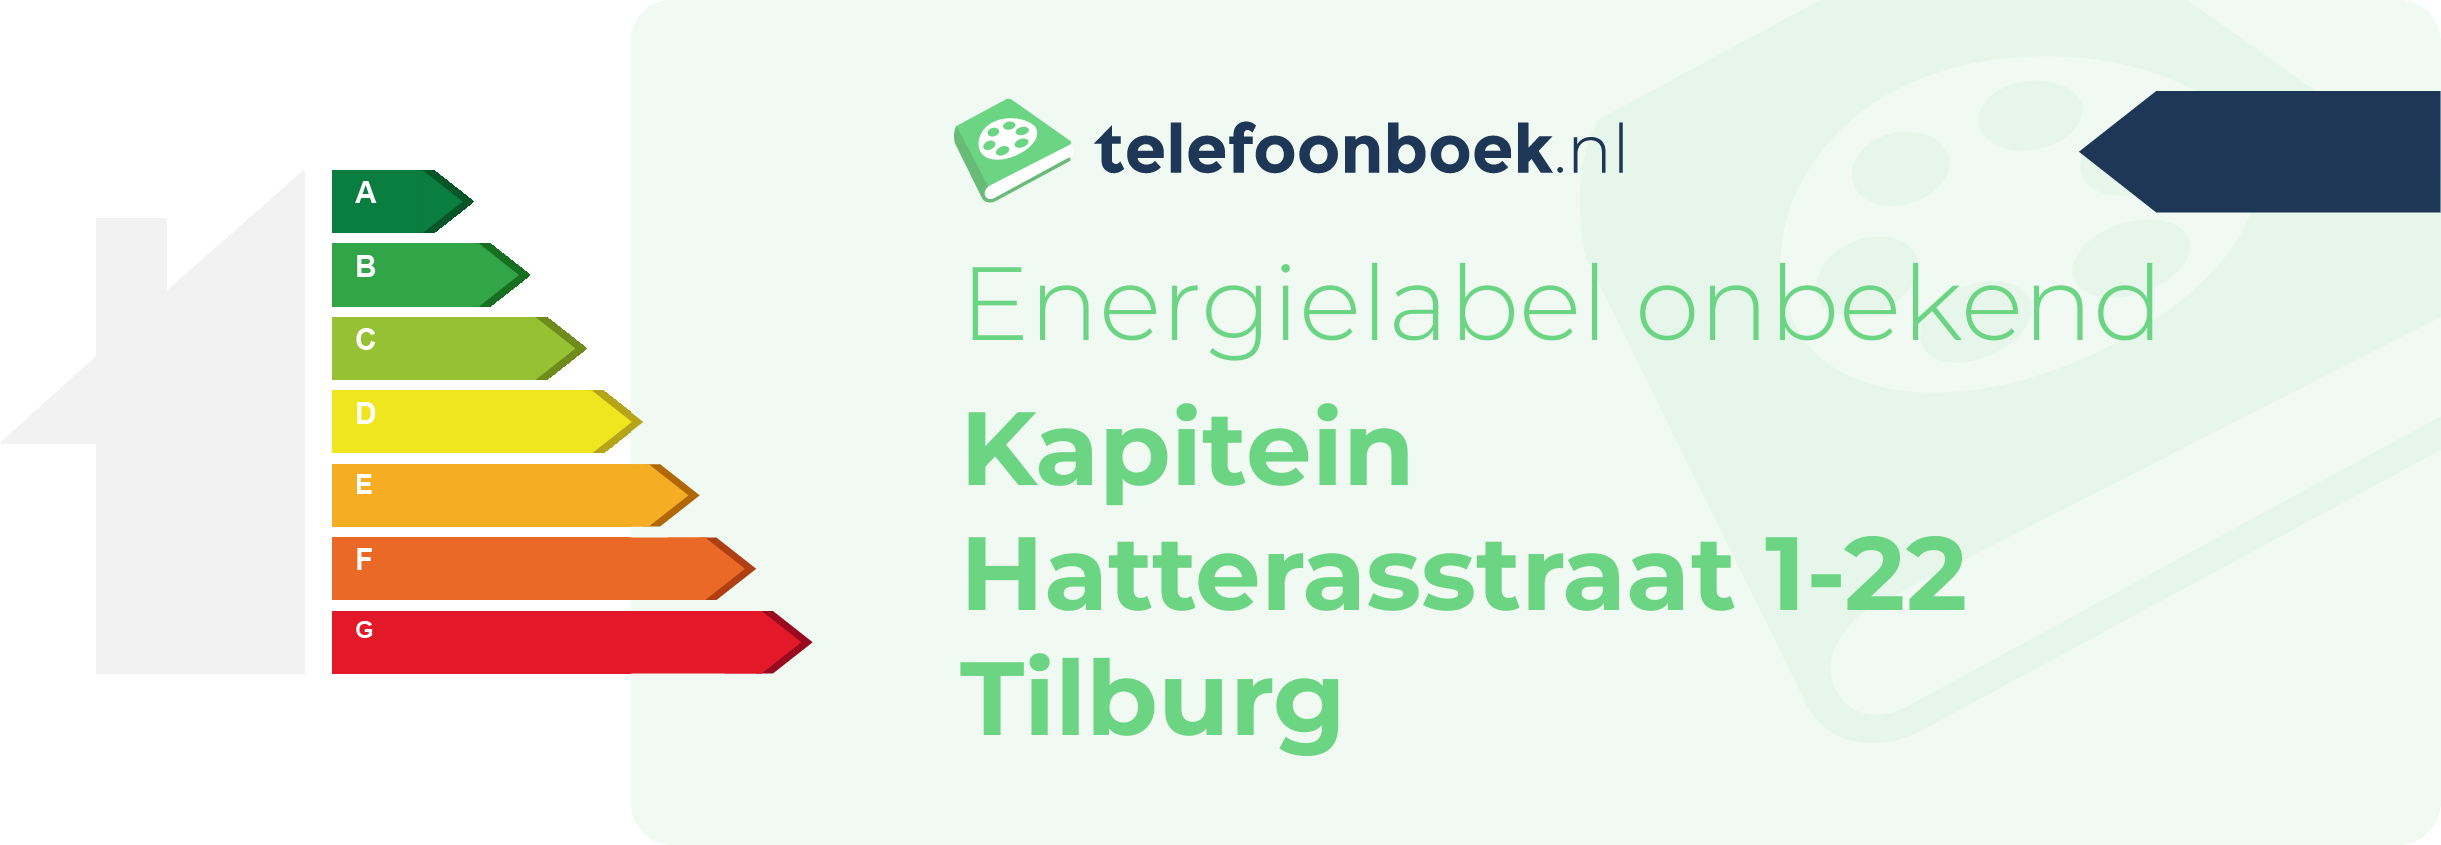 Energielabel Kapitein Hatterasstraat 1-22 Tilburg